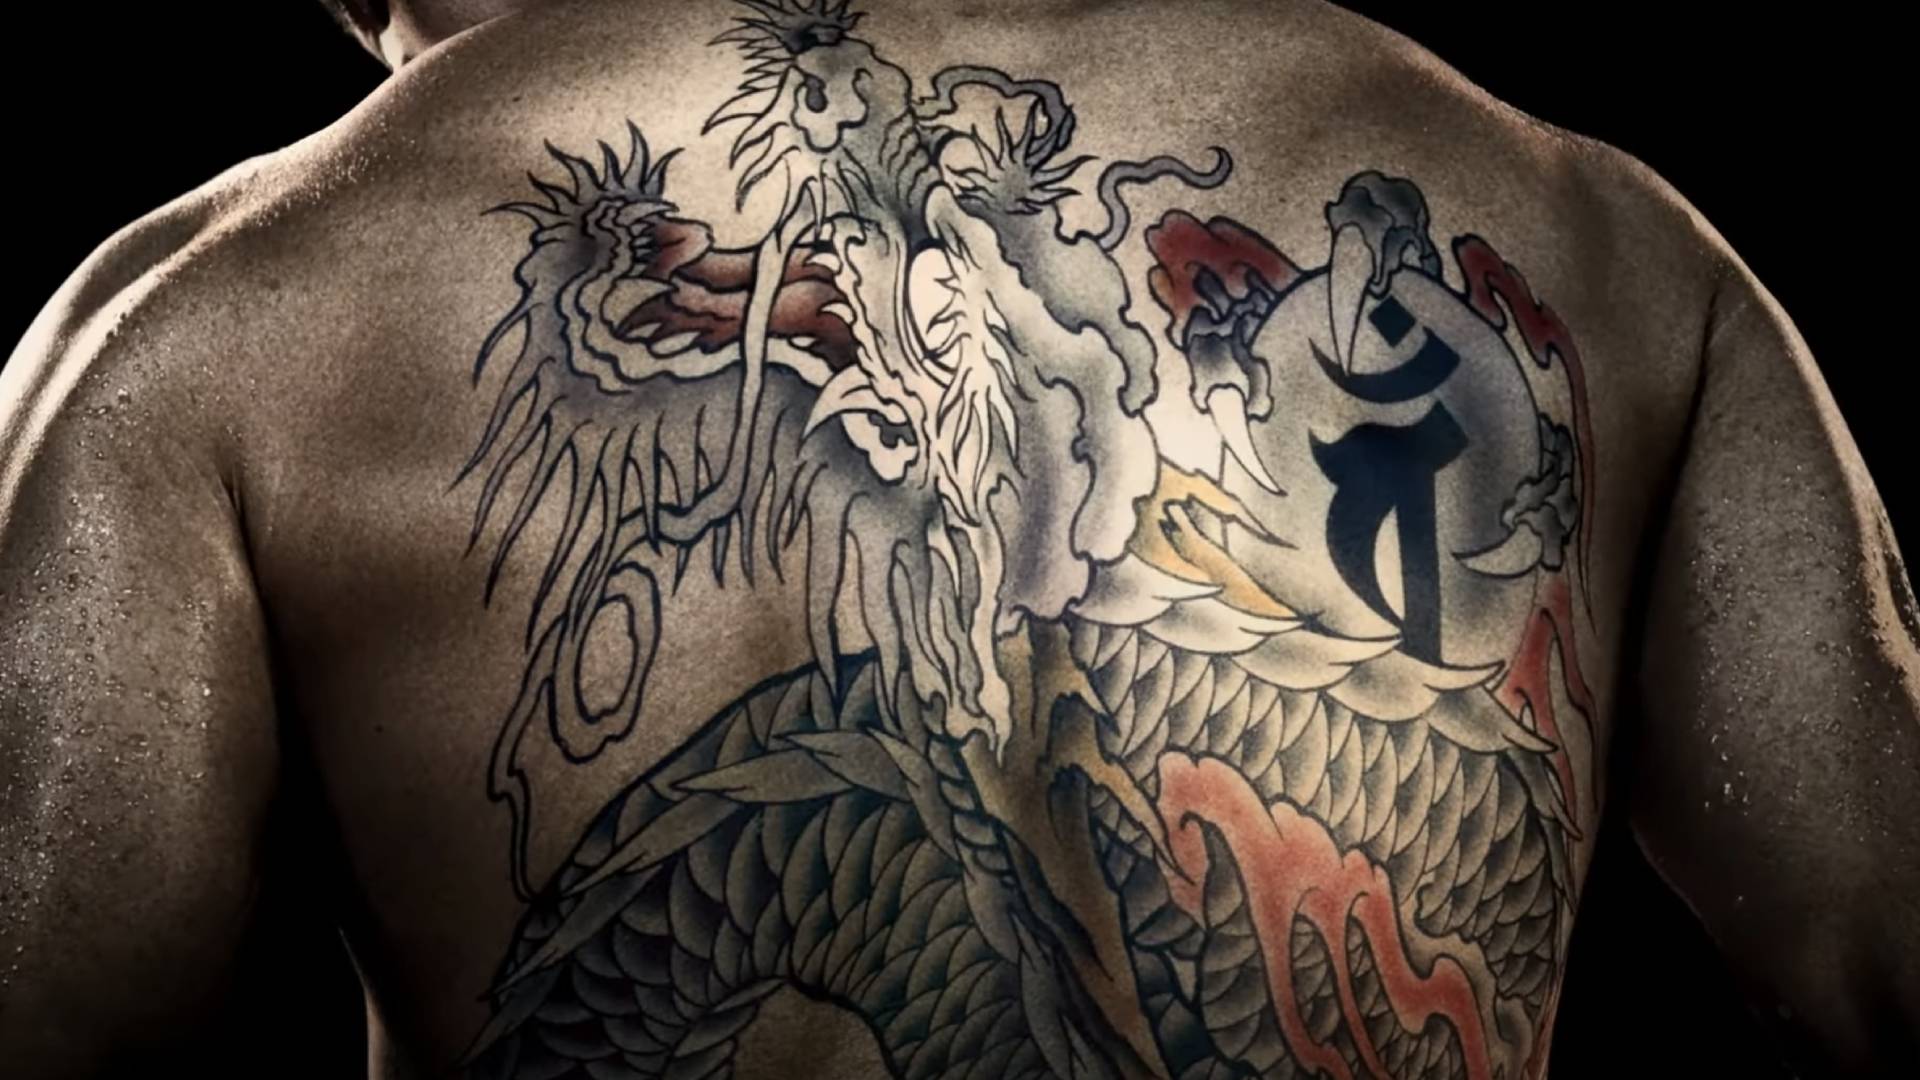  First Like a Dragon: Yakuza Prime Video trailer teases Kiryu's iconic tattoo and Kamurocho's glitzy, criminal underworld 